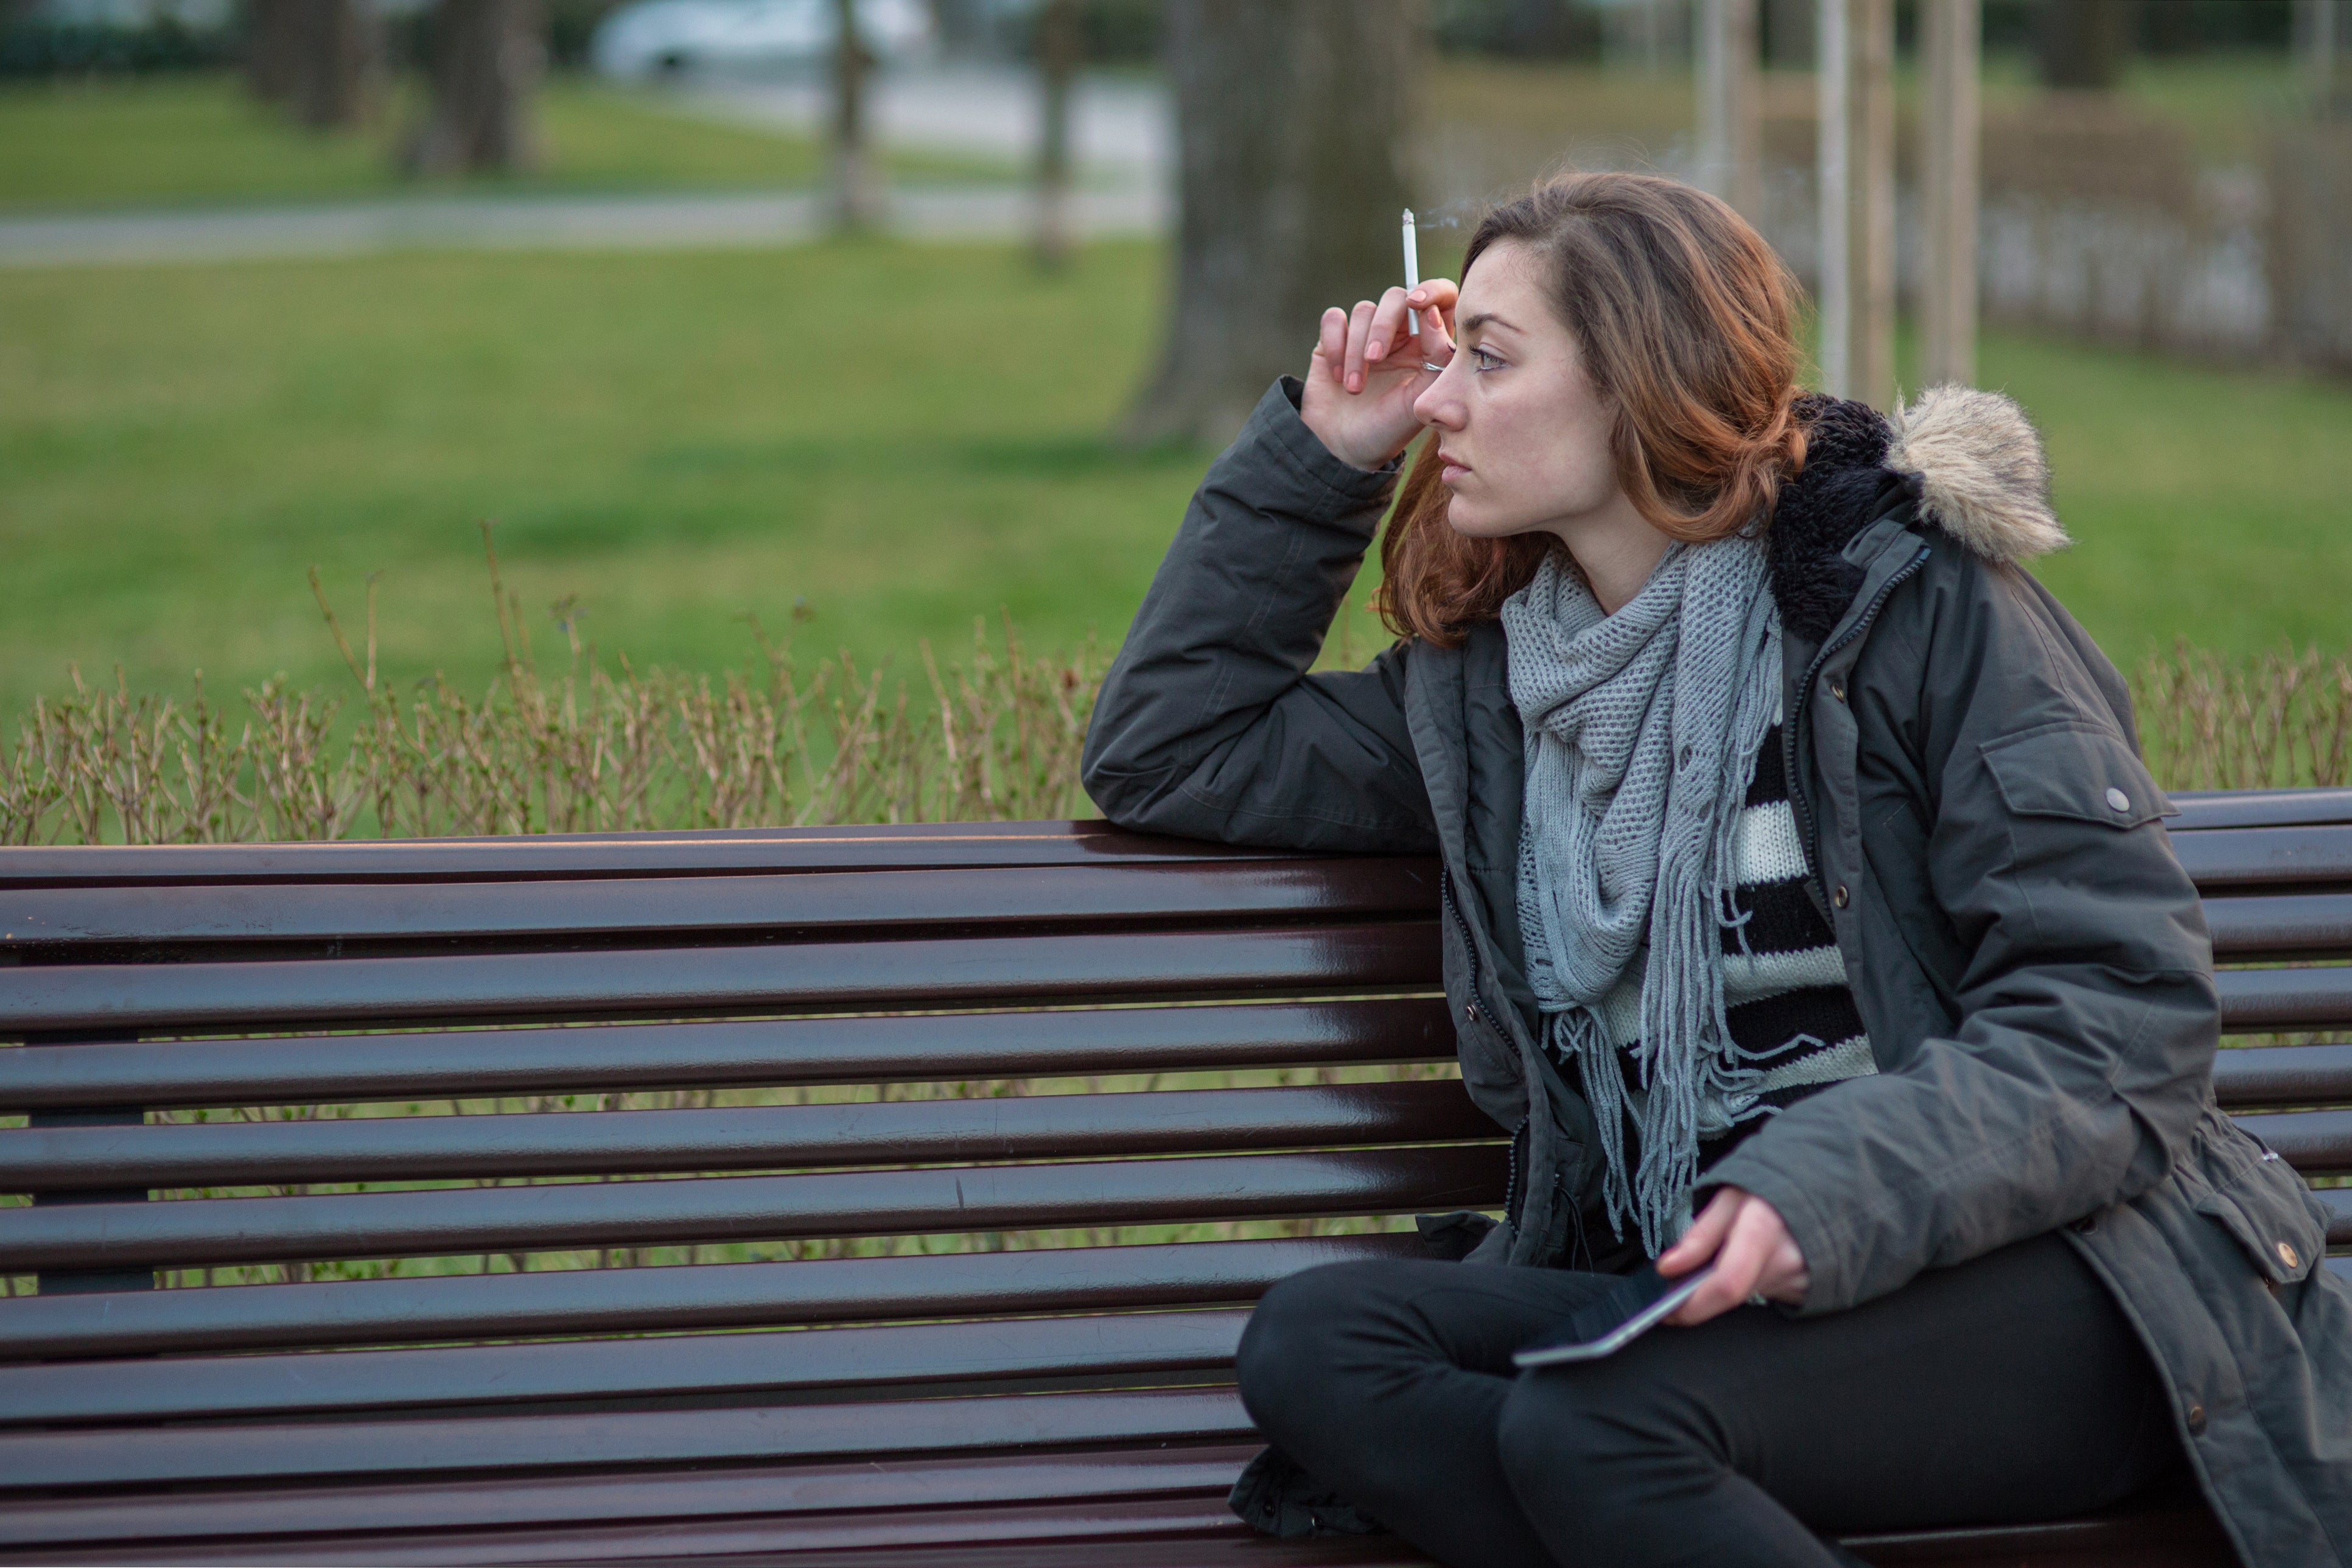 Denmark has a teen smoking problem